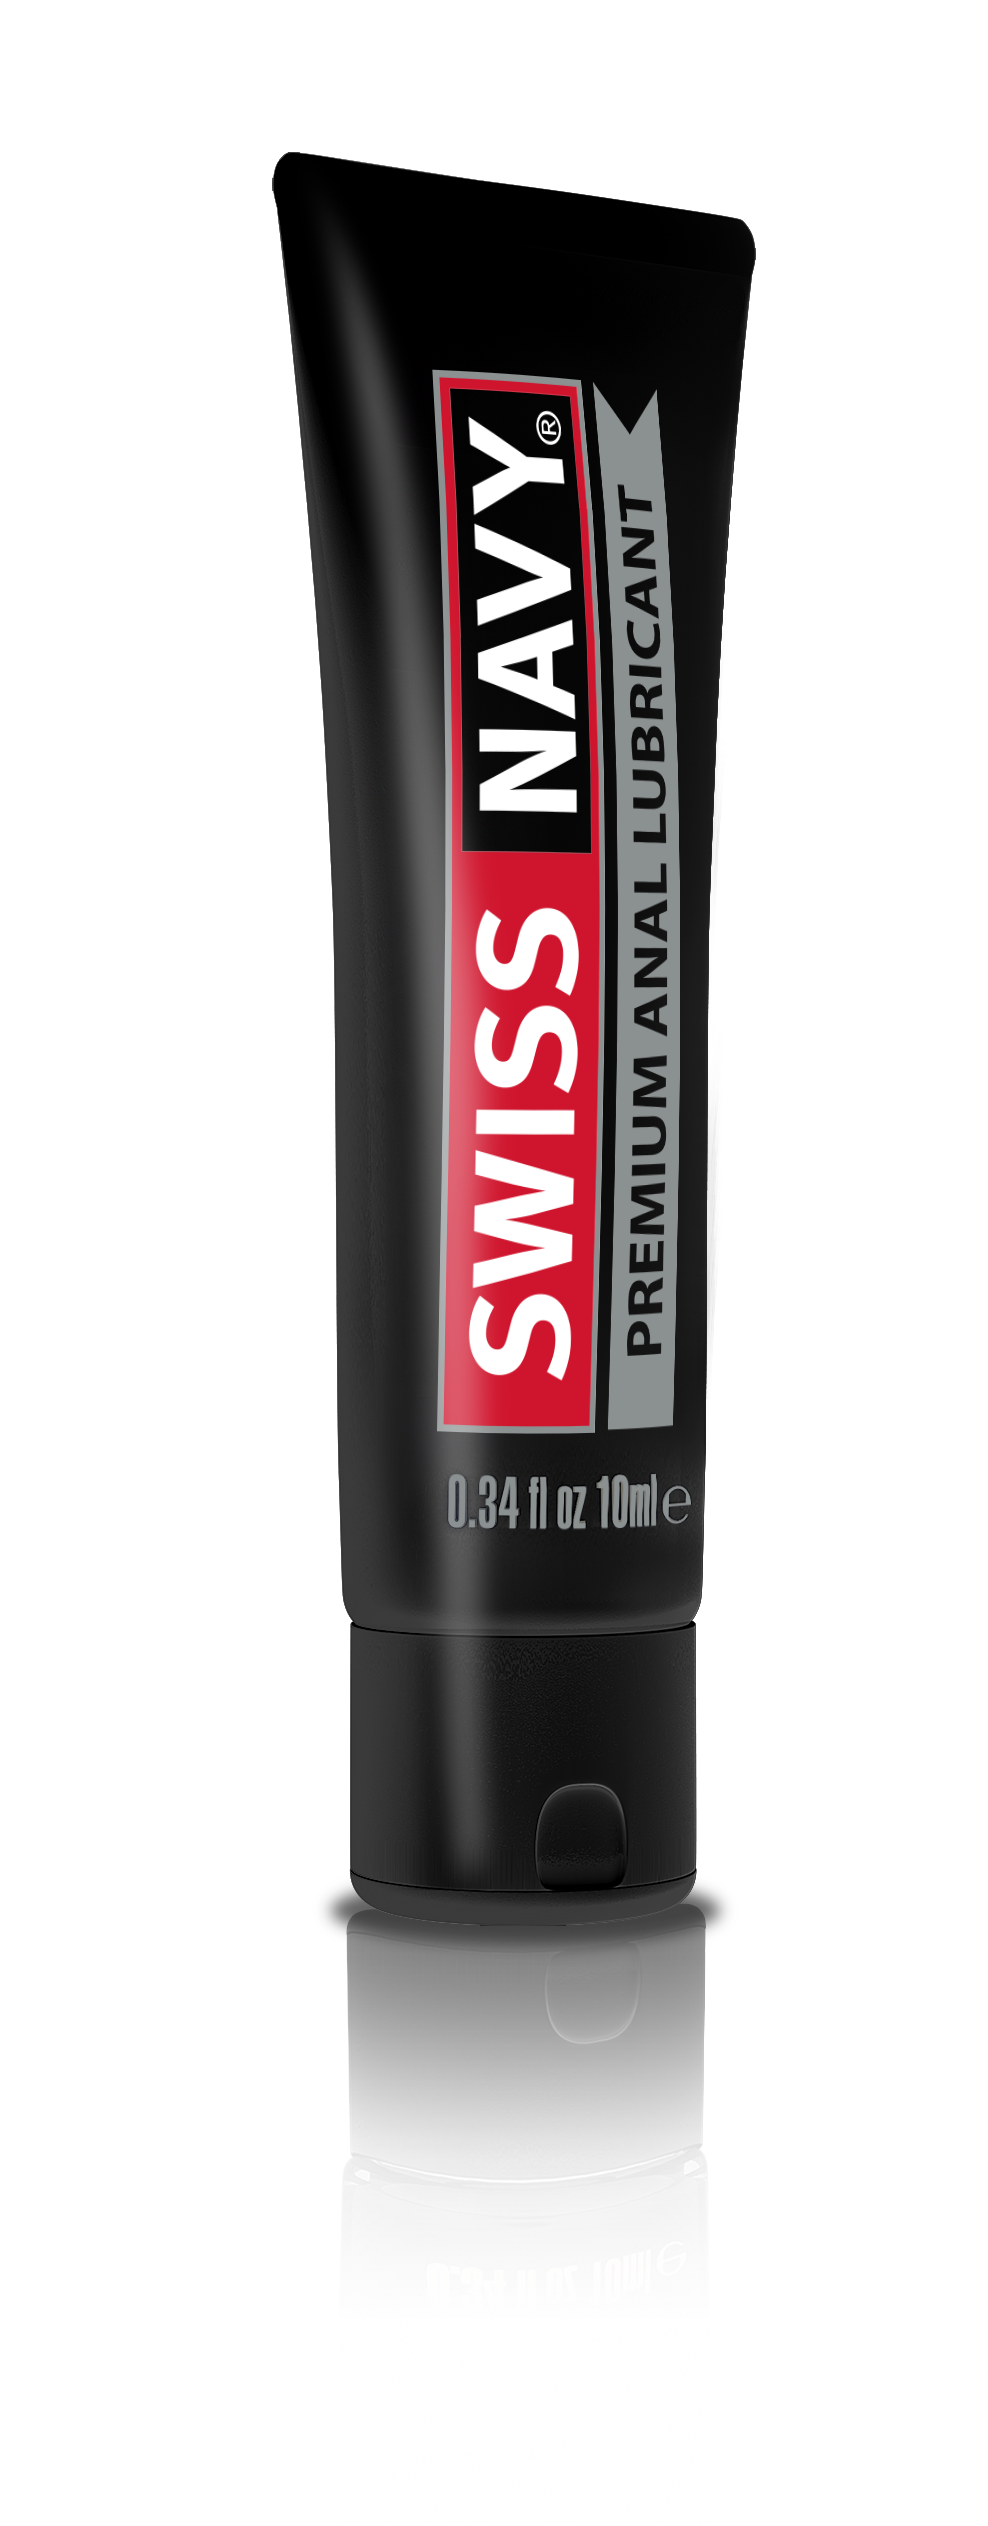 Swiss Navy Premium Anal Lubricant • Desensitizer Silicone Lubricant